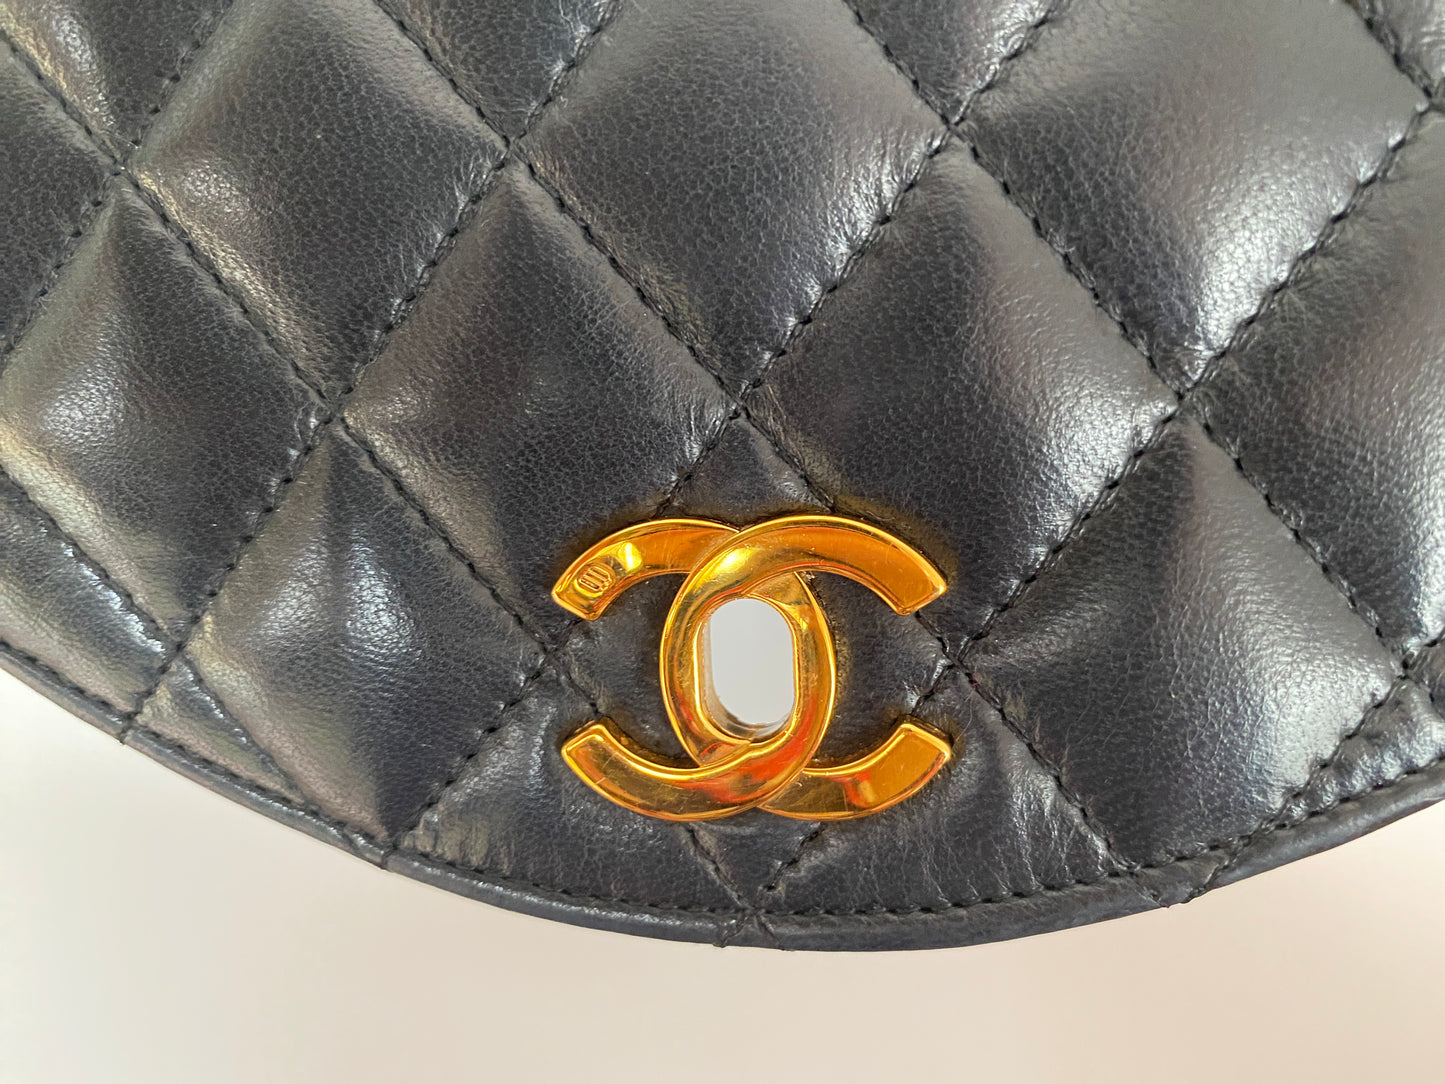 Chanel Black Lambskin Flap Bag